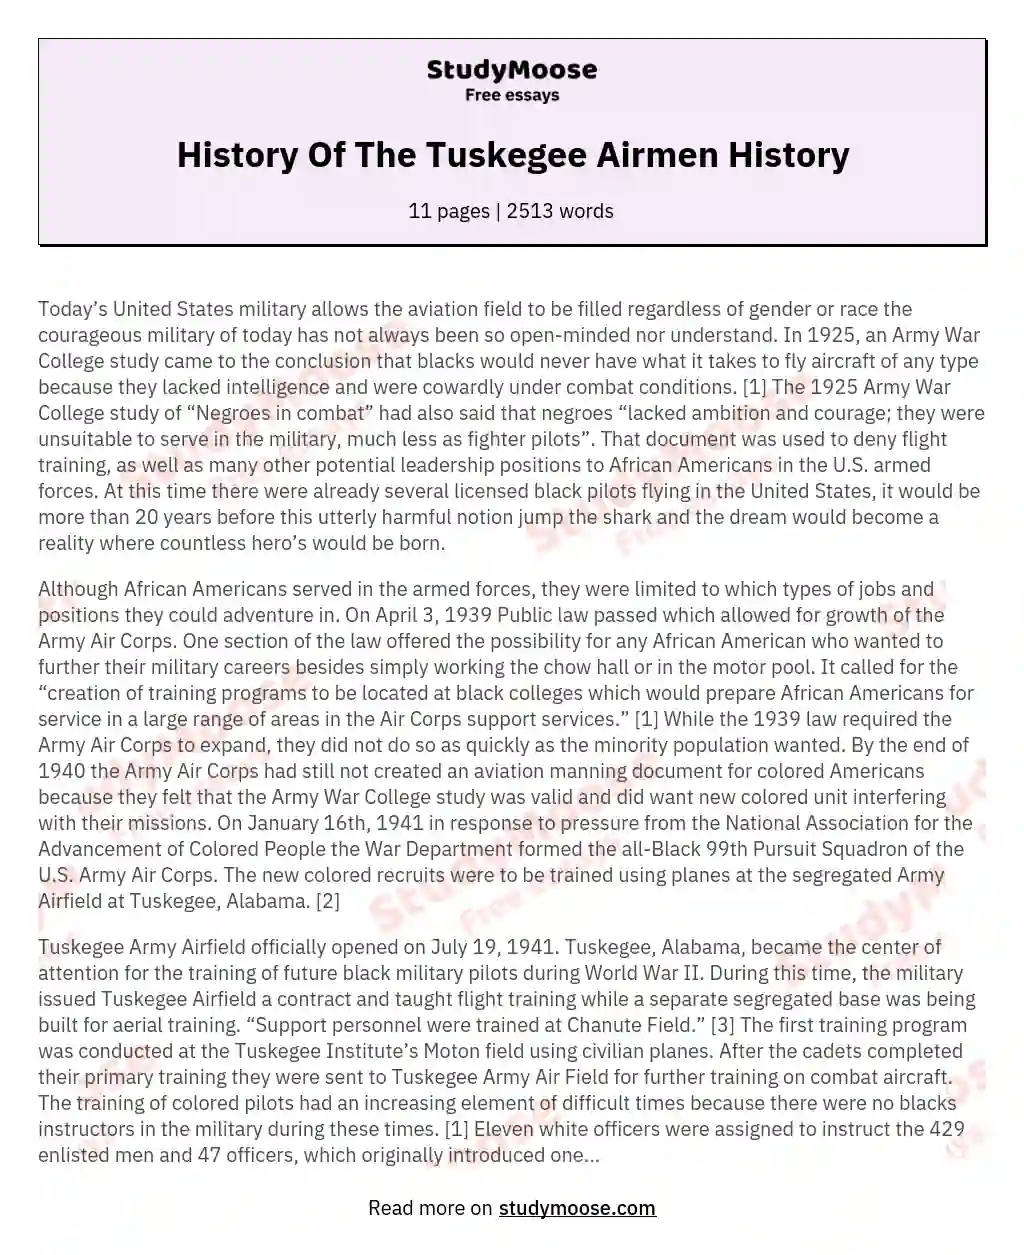 History Of The Tuskegee Airmen History essay